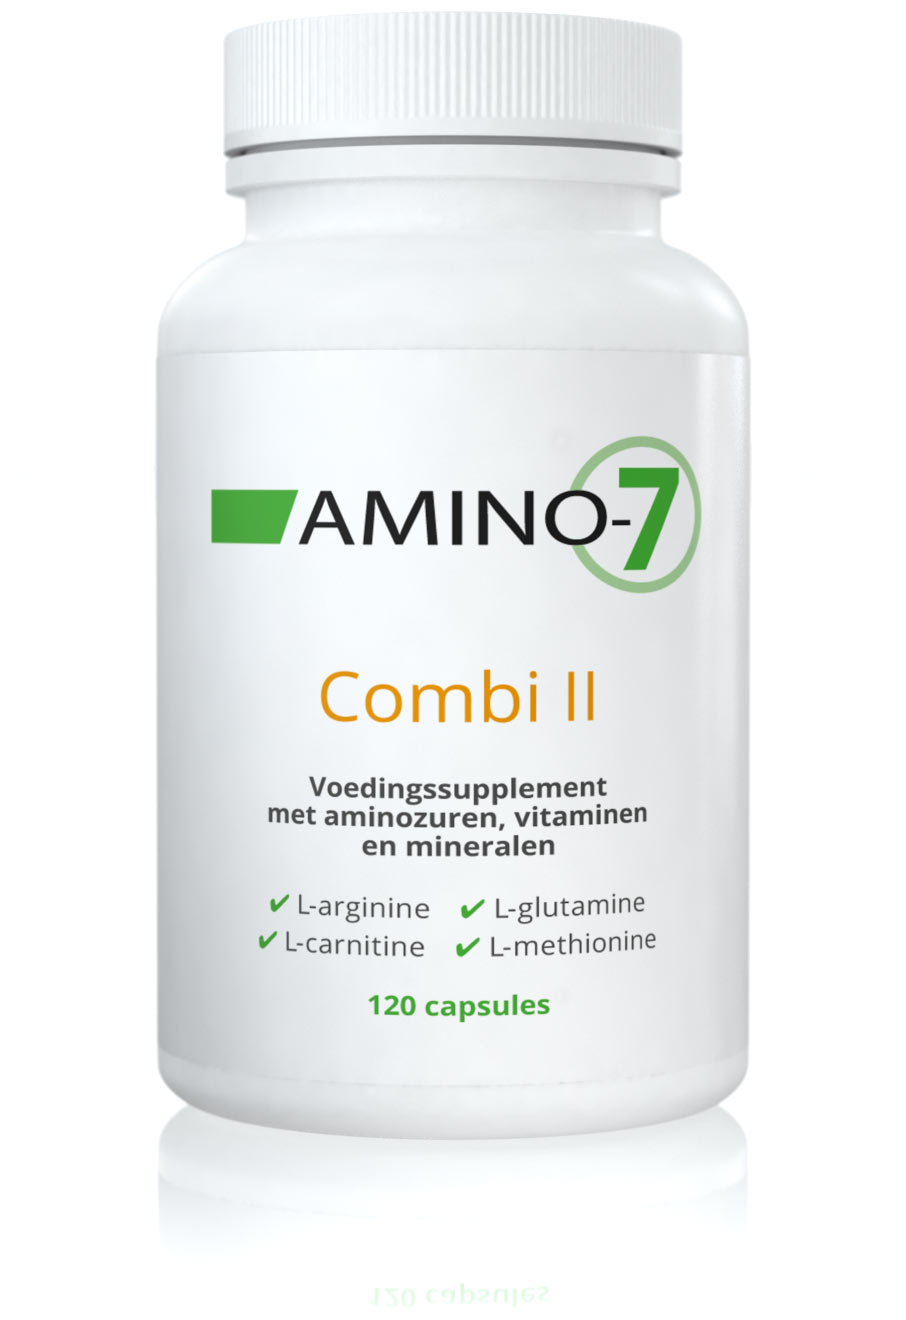 AMINO-7 Combi II